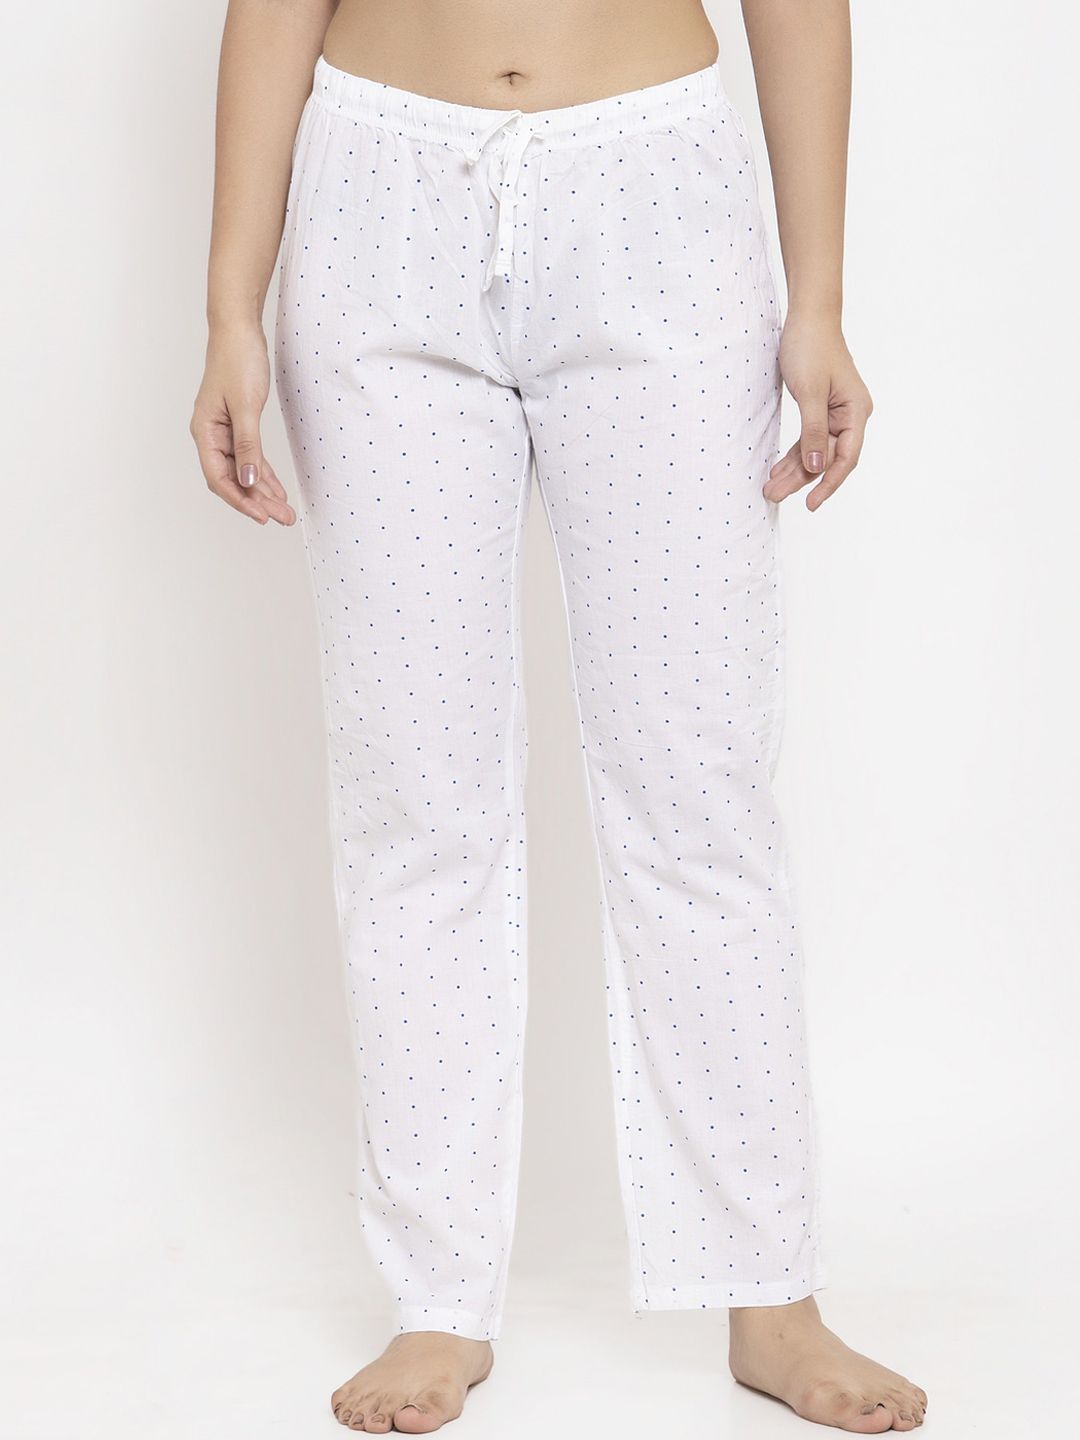 Wolfpack Women White Small Polka Dot Printed Pyjamas Price in India